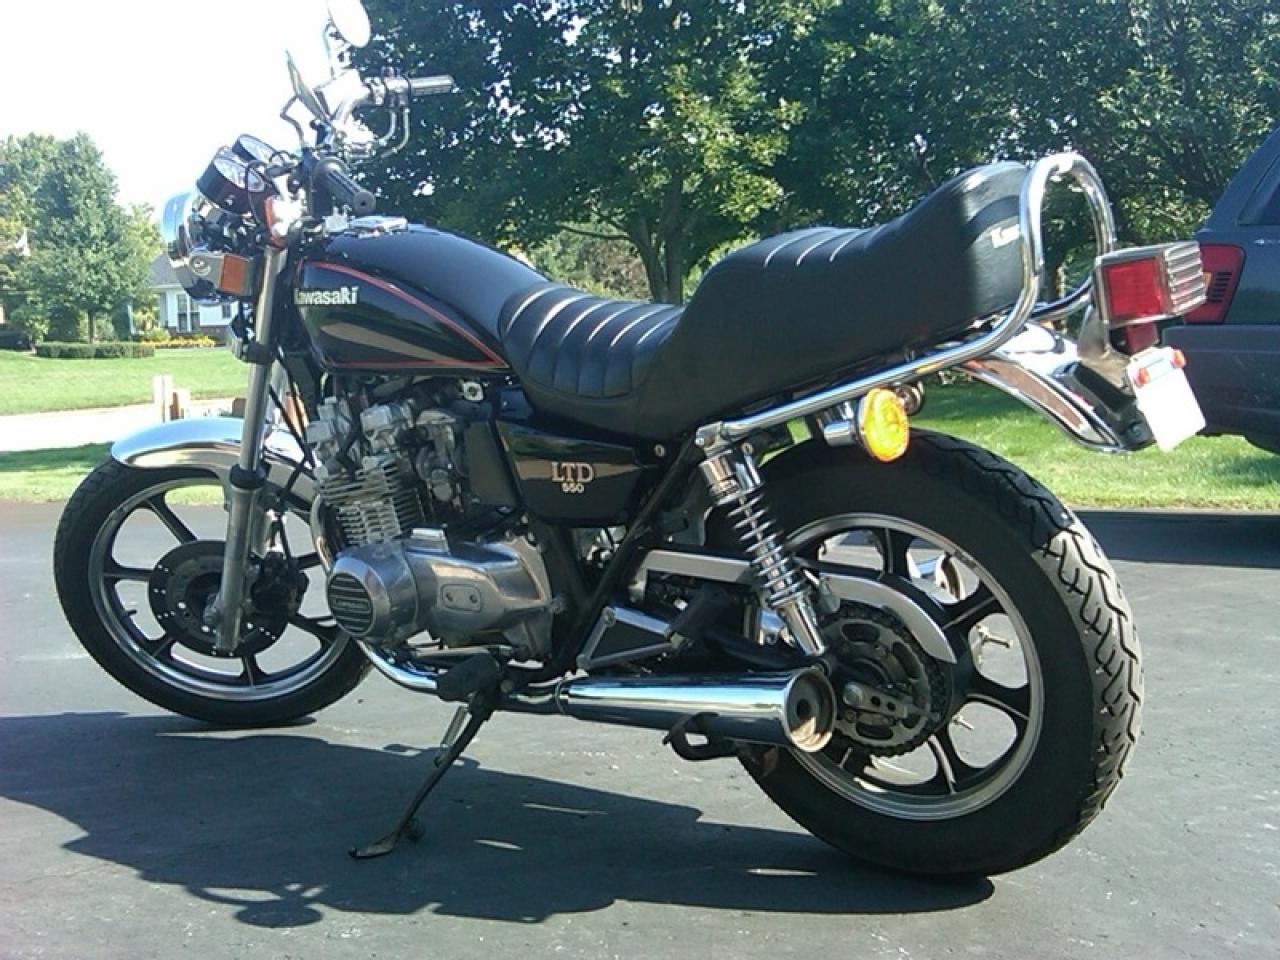 Обзор мотоцикла kawasaki gpz550 (zx550a)